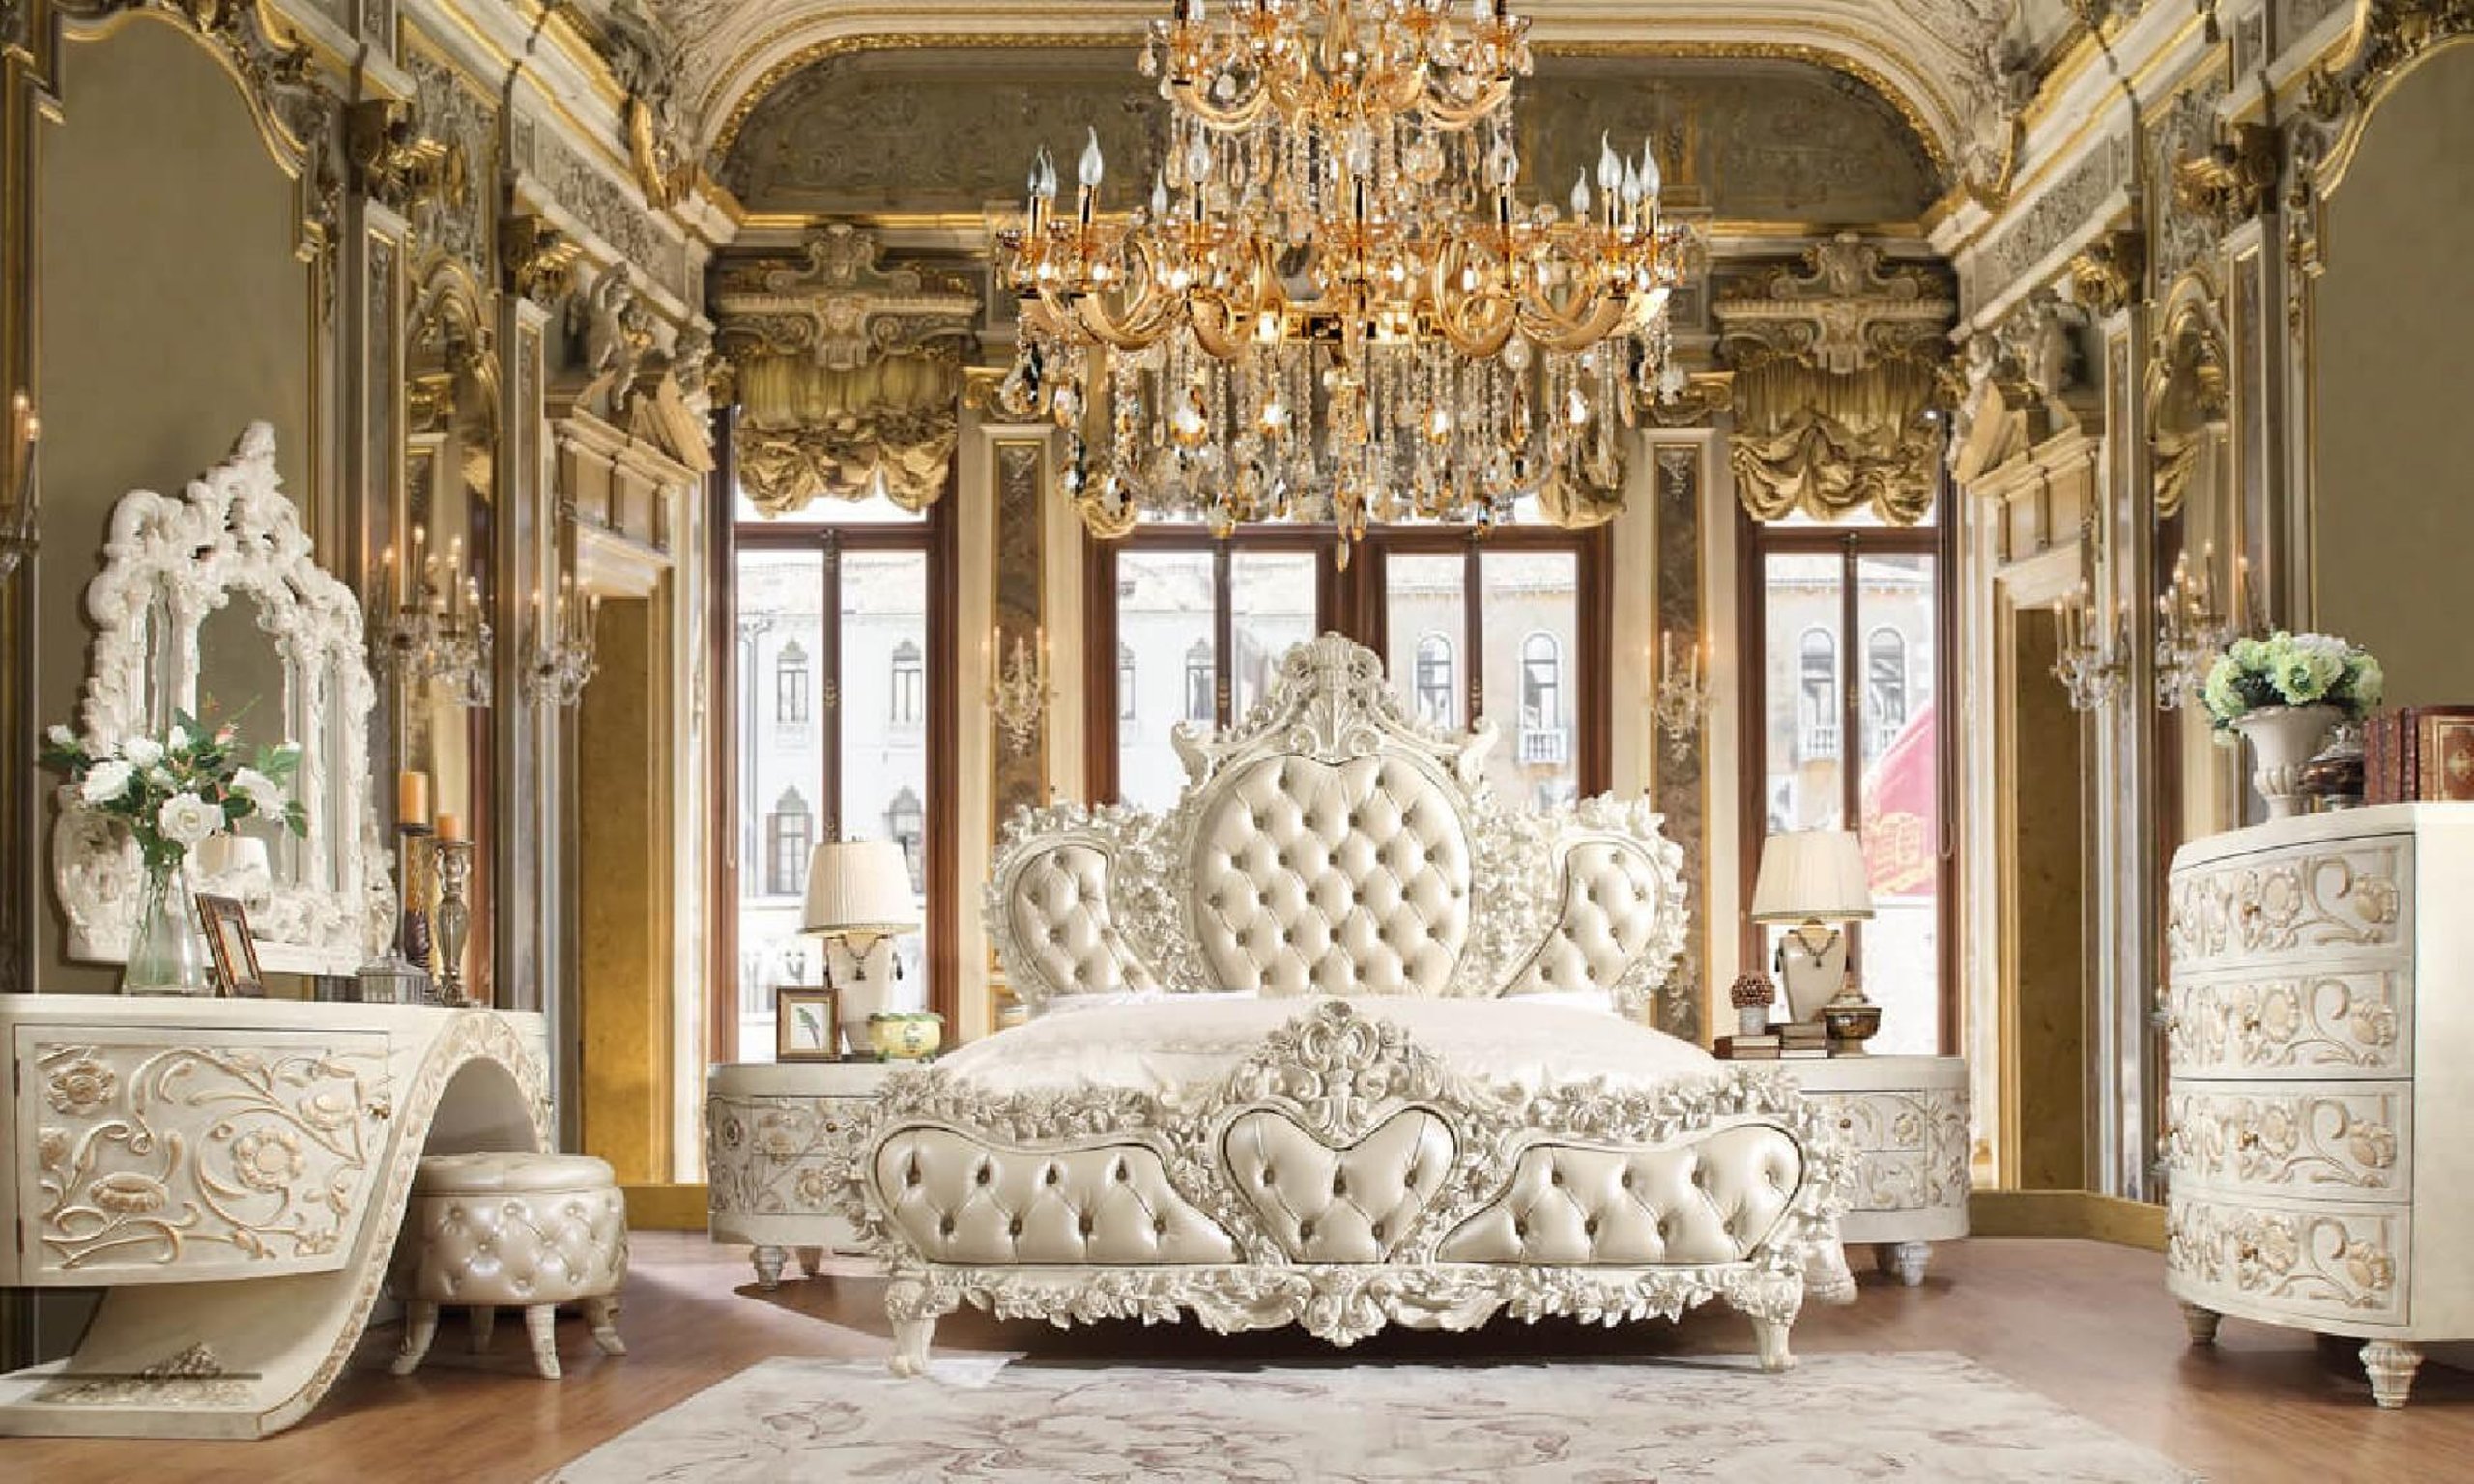 luxury cal king bedroom set 5 pcs white traditional homey design